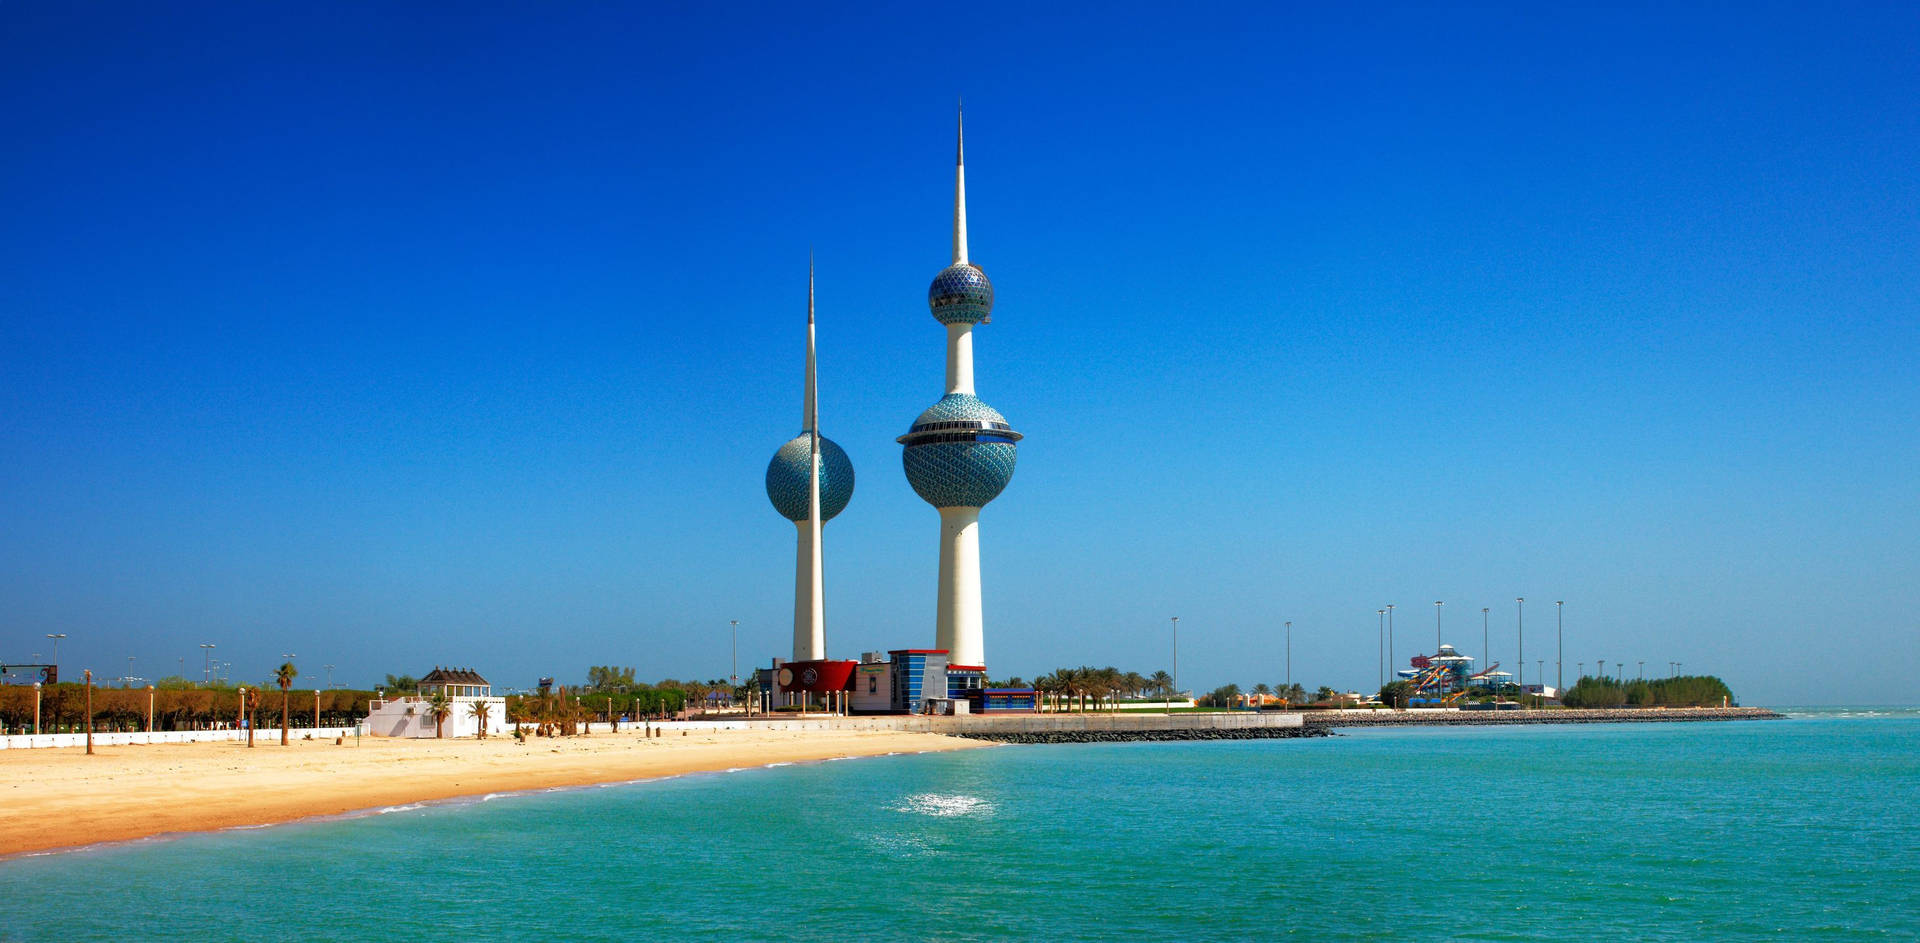 Kuwait Towers Eye-catching Spheres Background